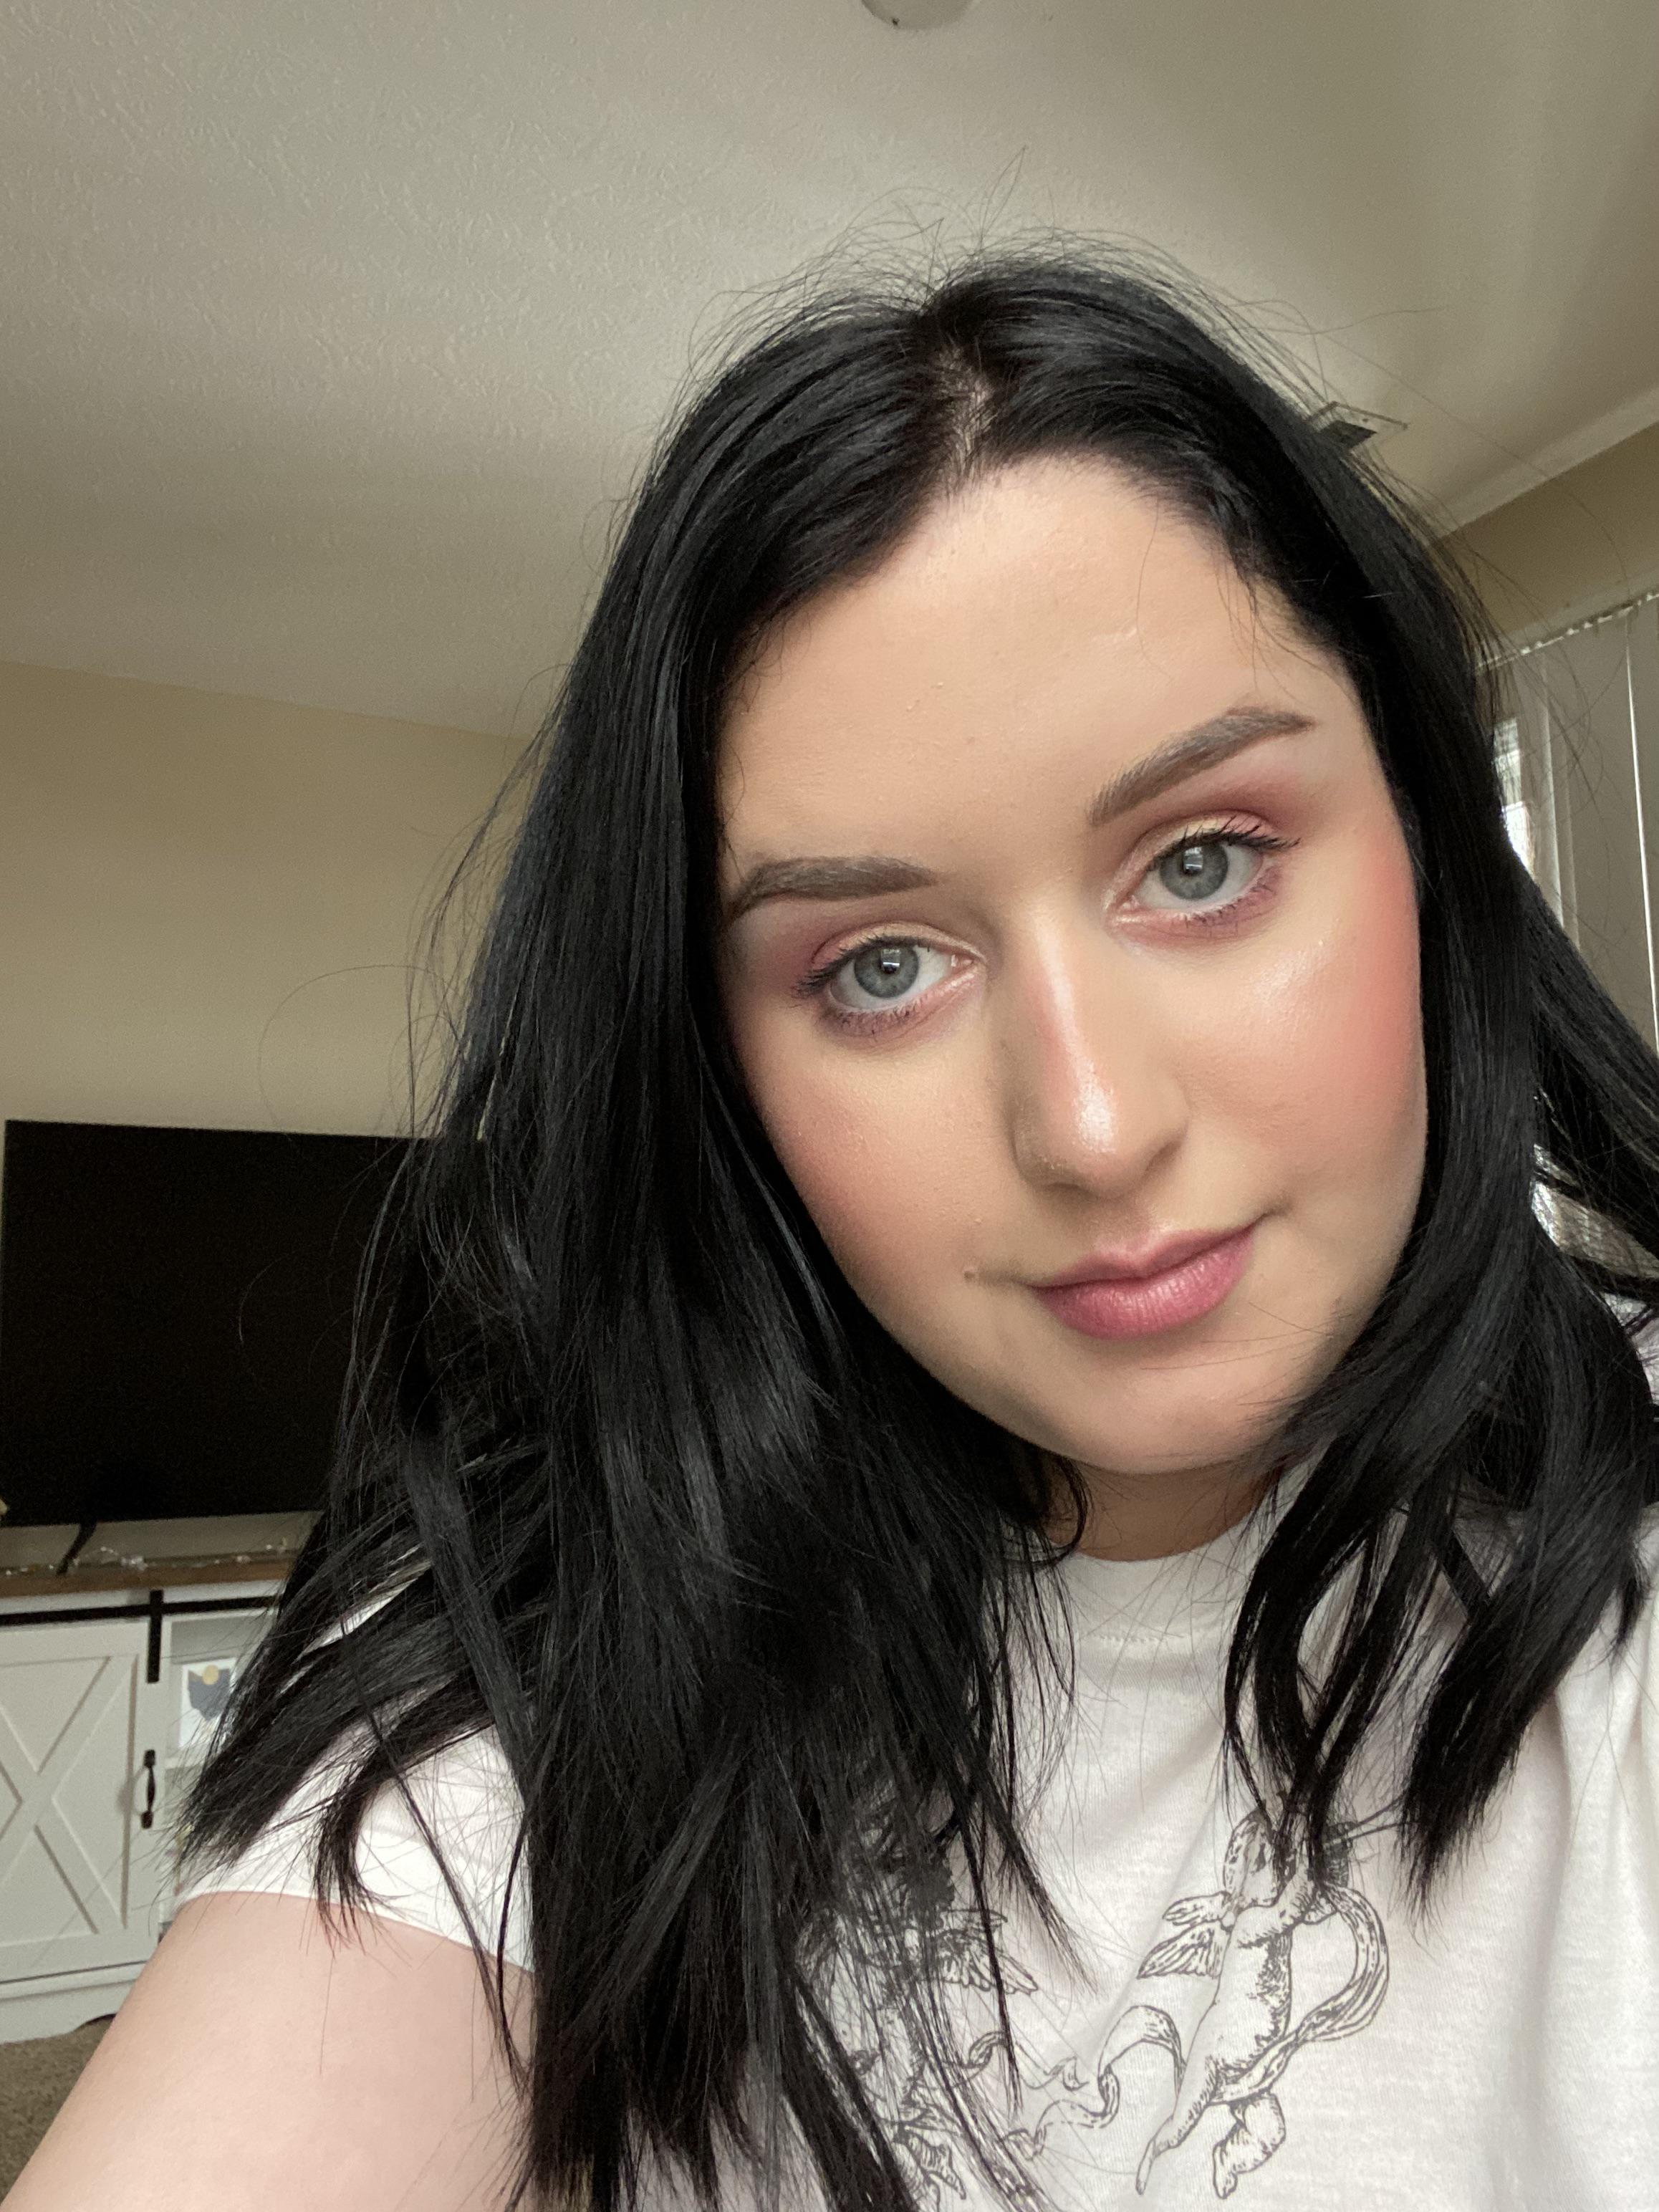 Fresh Waxed Eyebrows Fresh Dyed Hair And My Favorite Makeup Looks 😇 Feelin Good 21 Scrolller